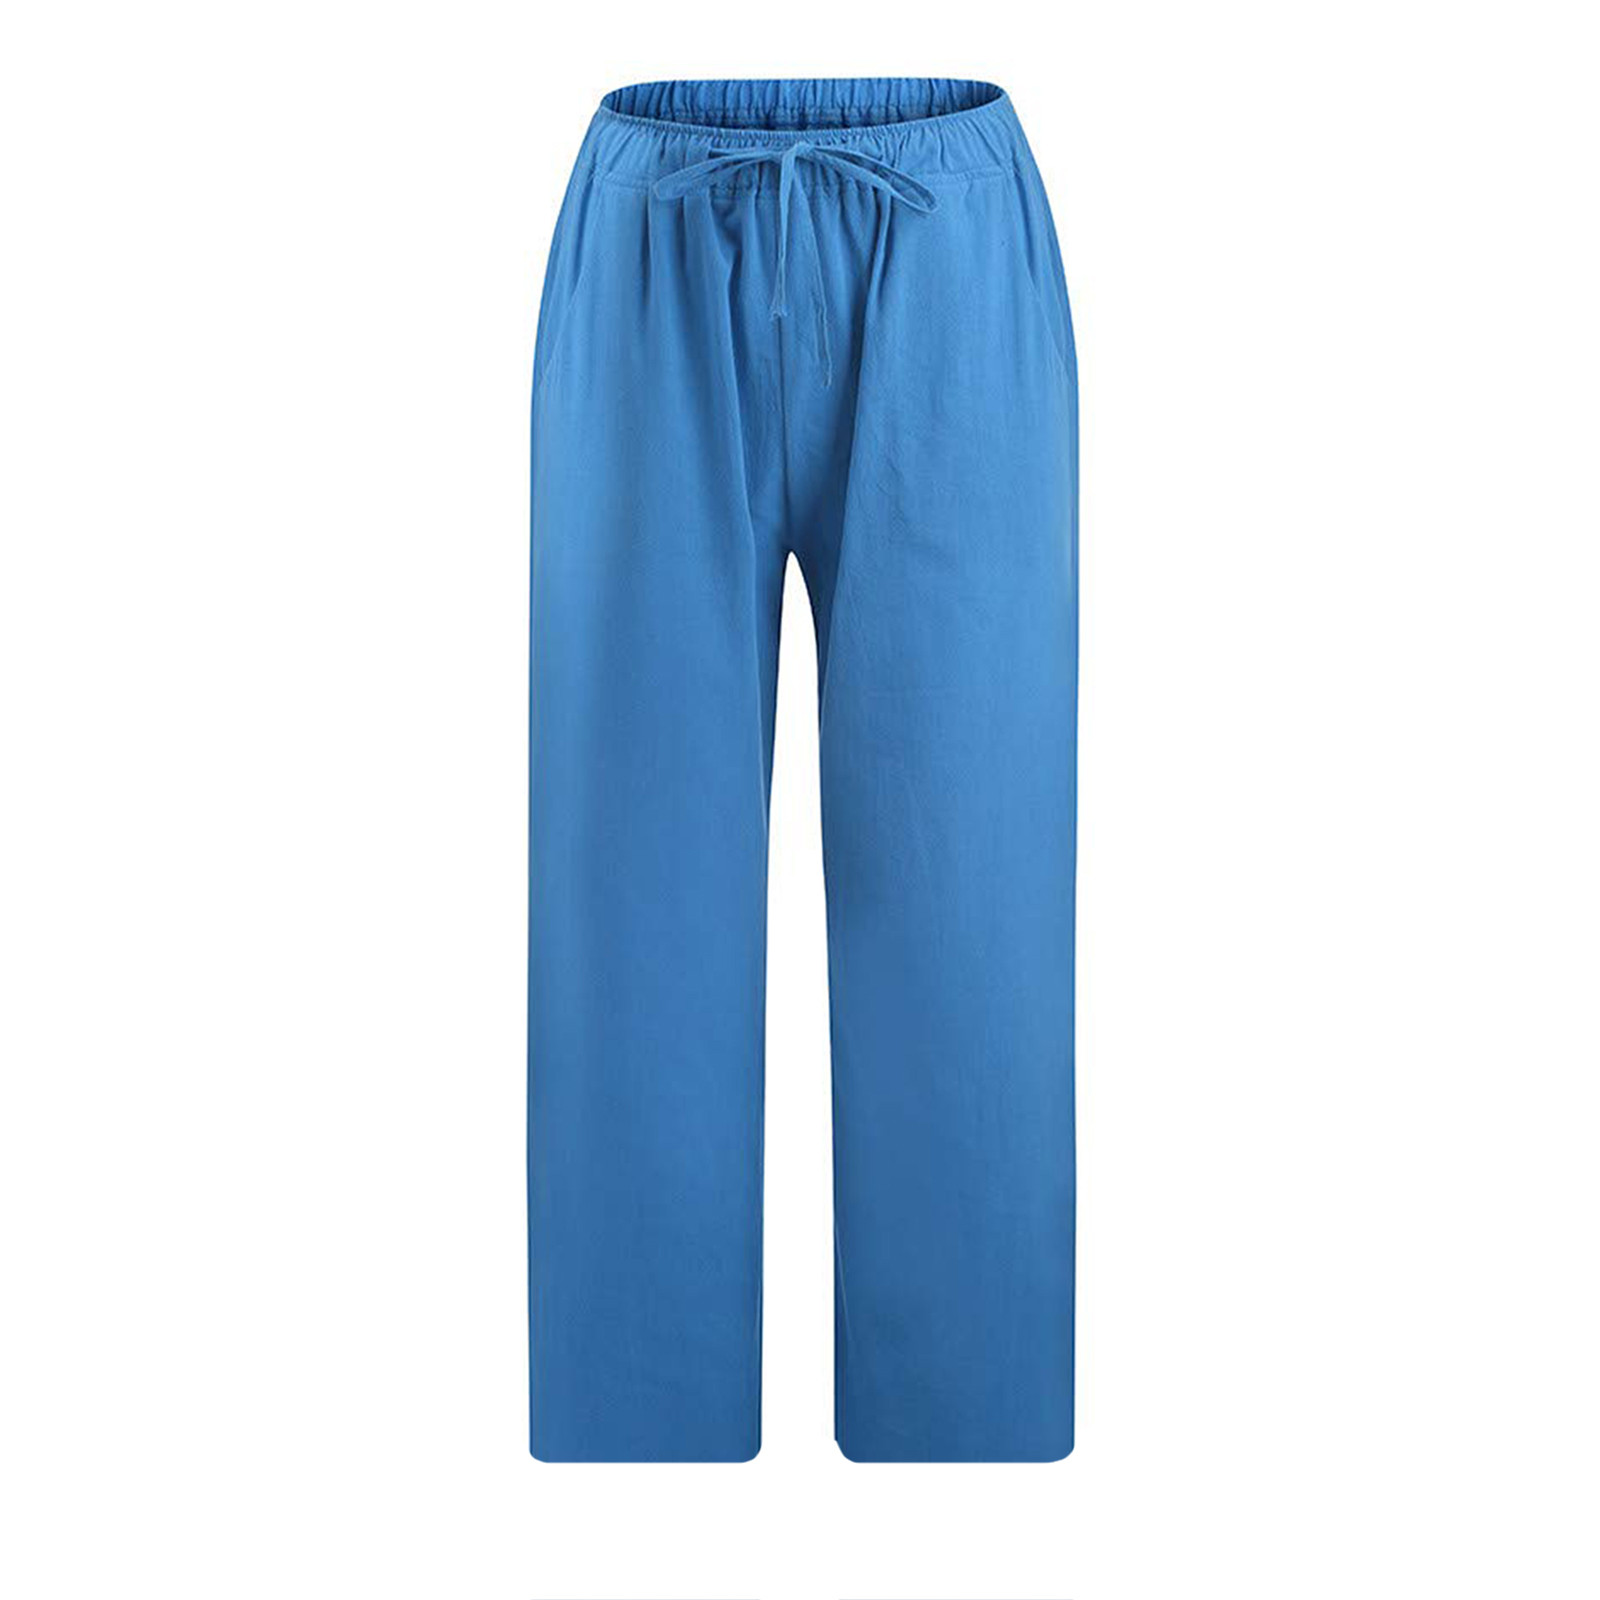 DeHolifer Women's Capri Pants with Pockets Cotton Linen Workout Out ...